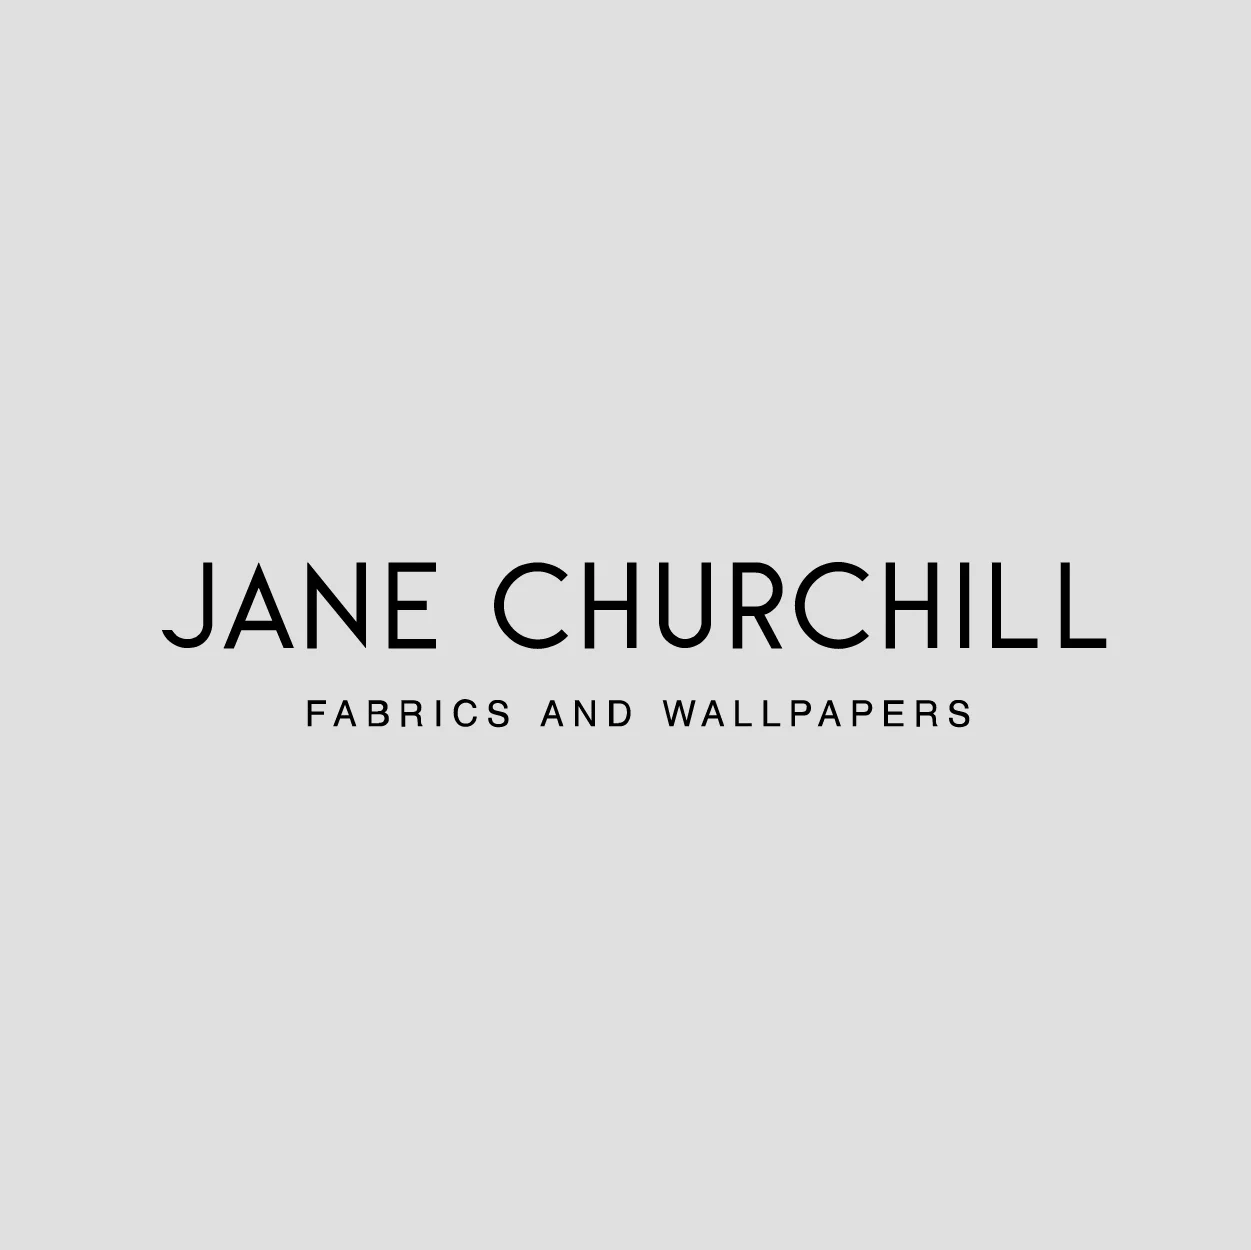 Jane Churchill